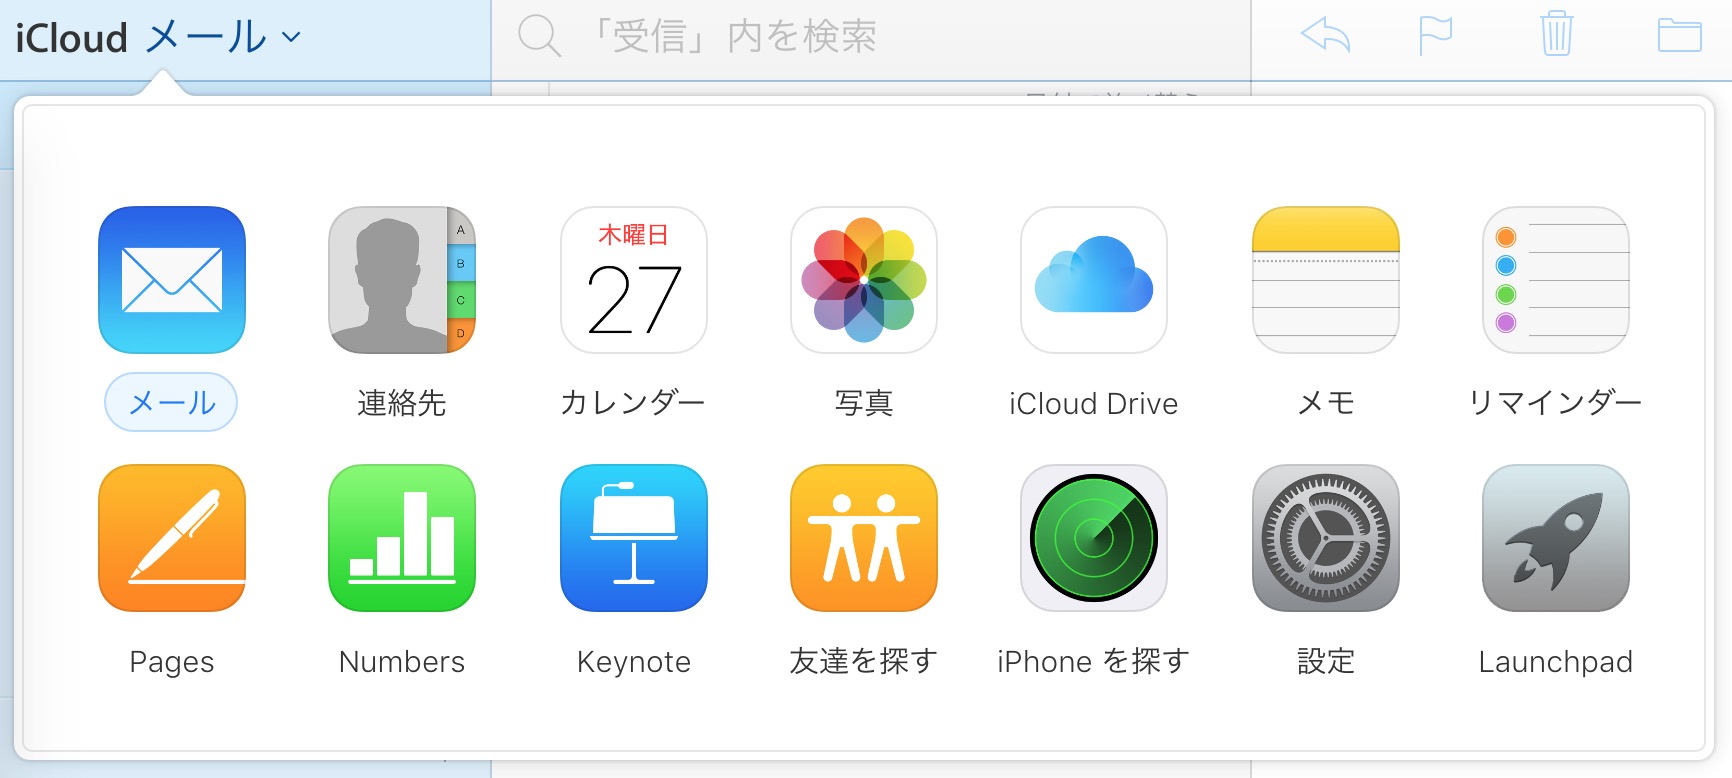 Apple、｢iCloud.com｣のUIを一部変更 − ｢Home｣ボタンが｢Launchpad｣ボタンに